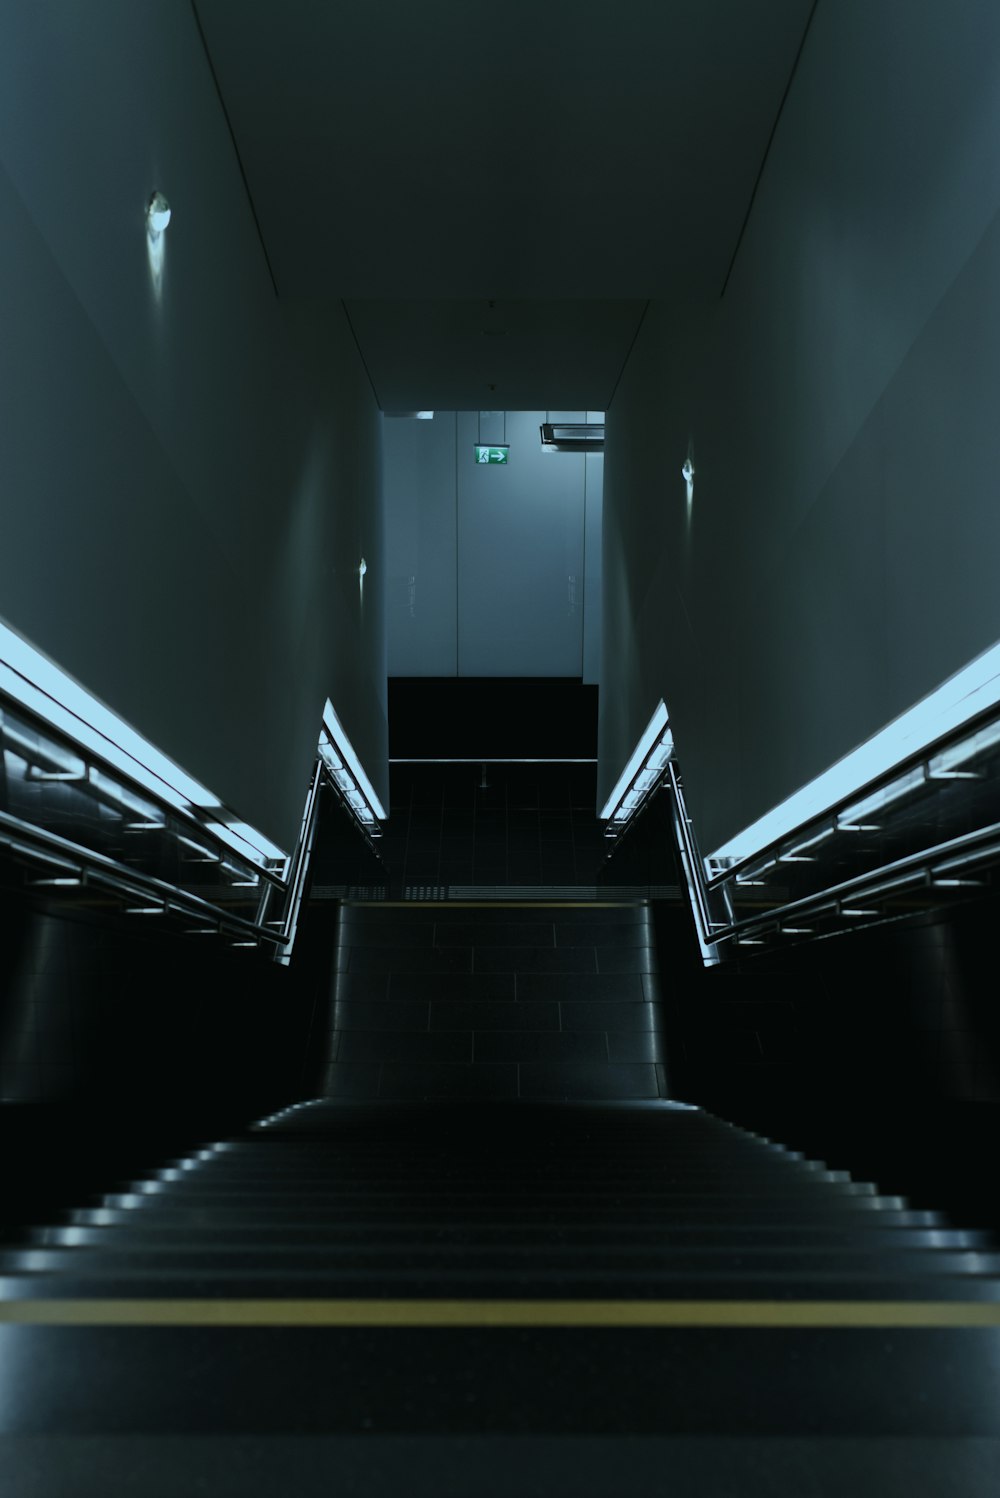 Un conjunto de escaleras que conducen a un ascensor